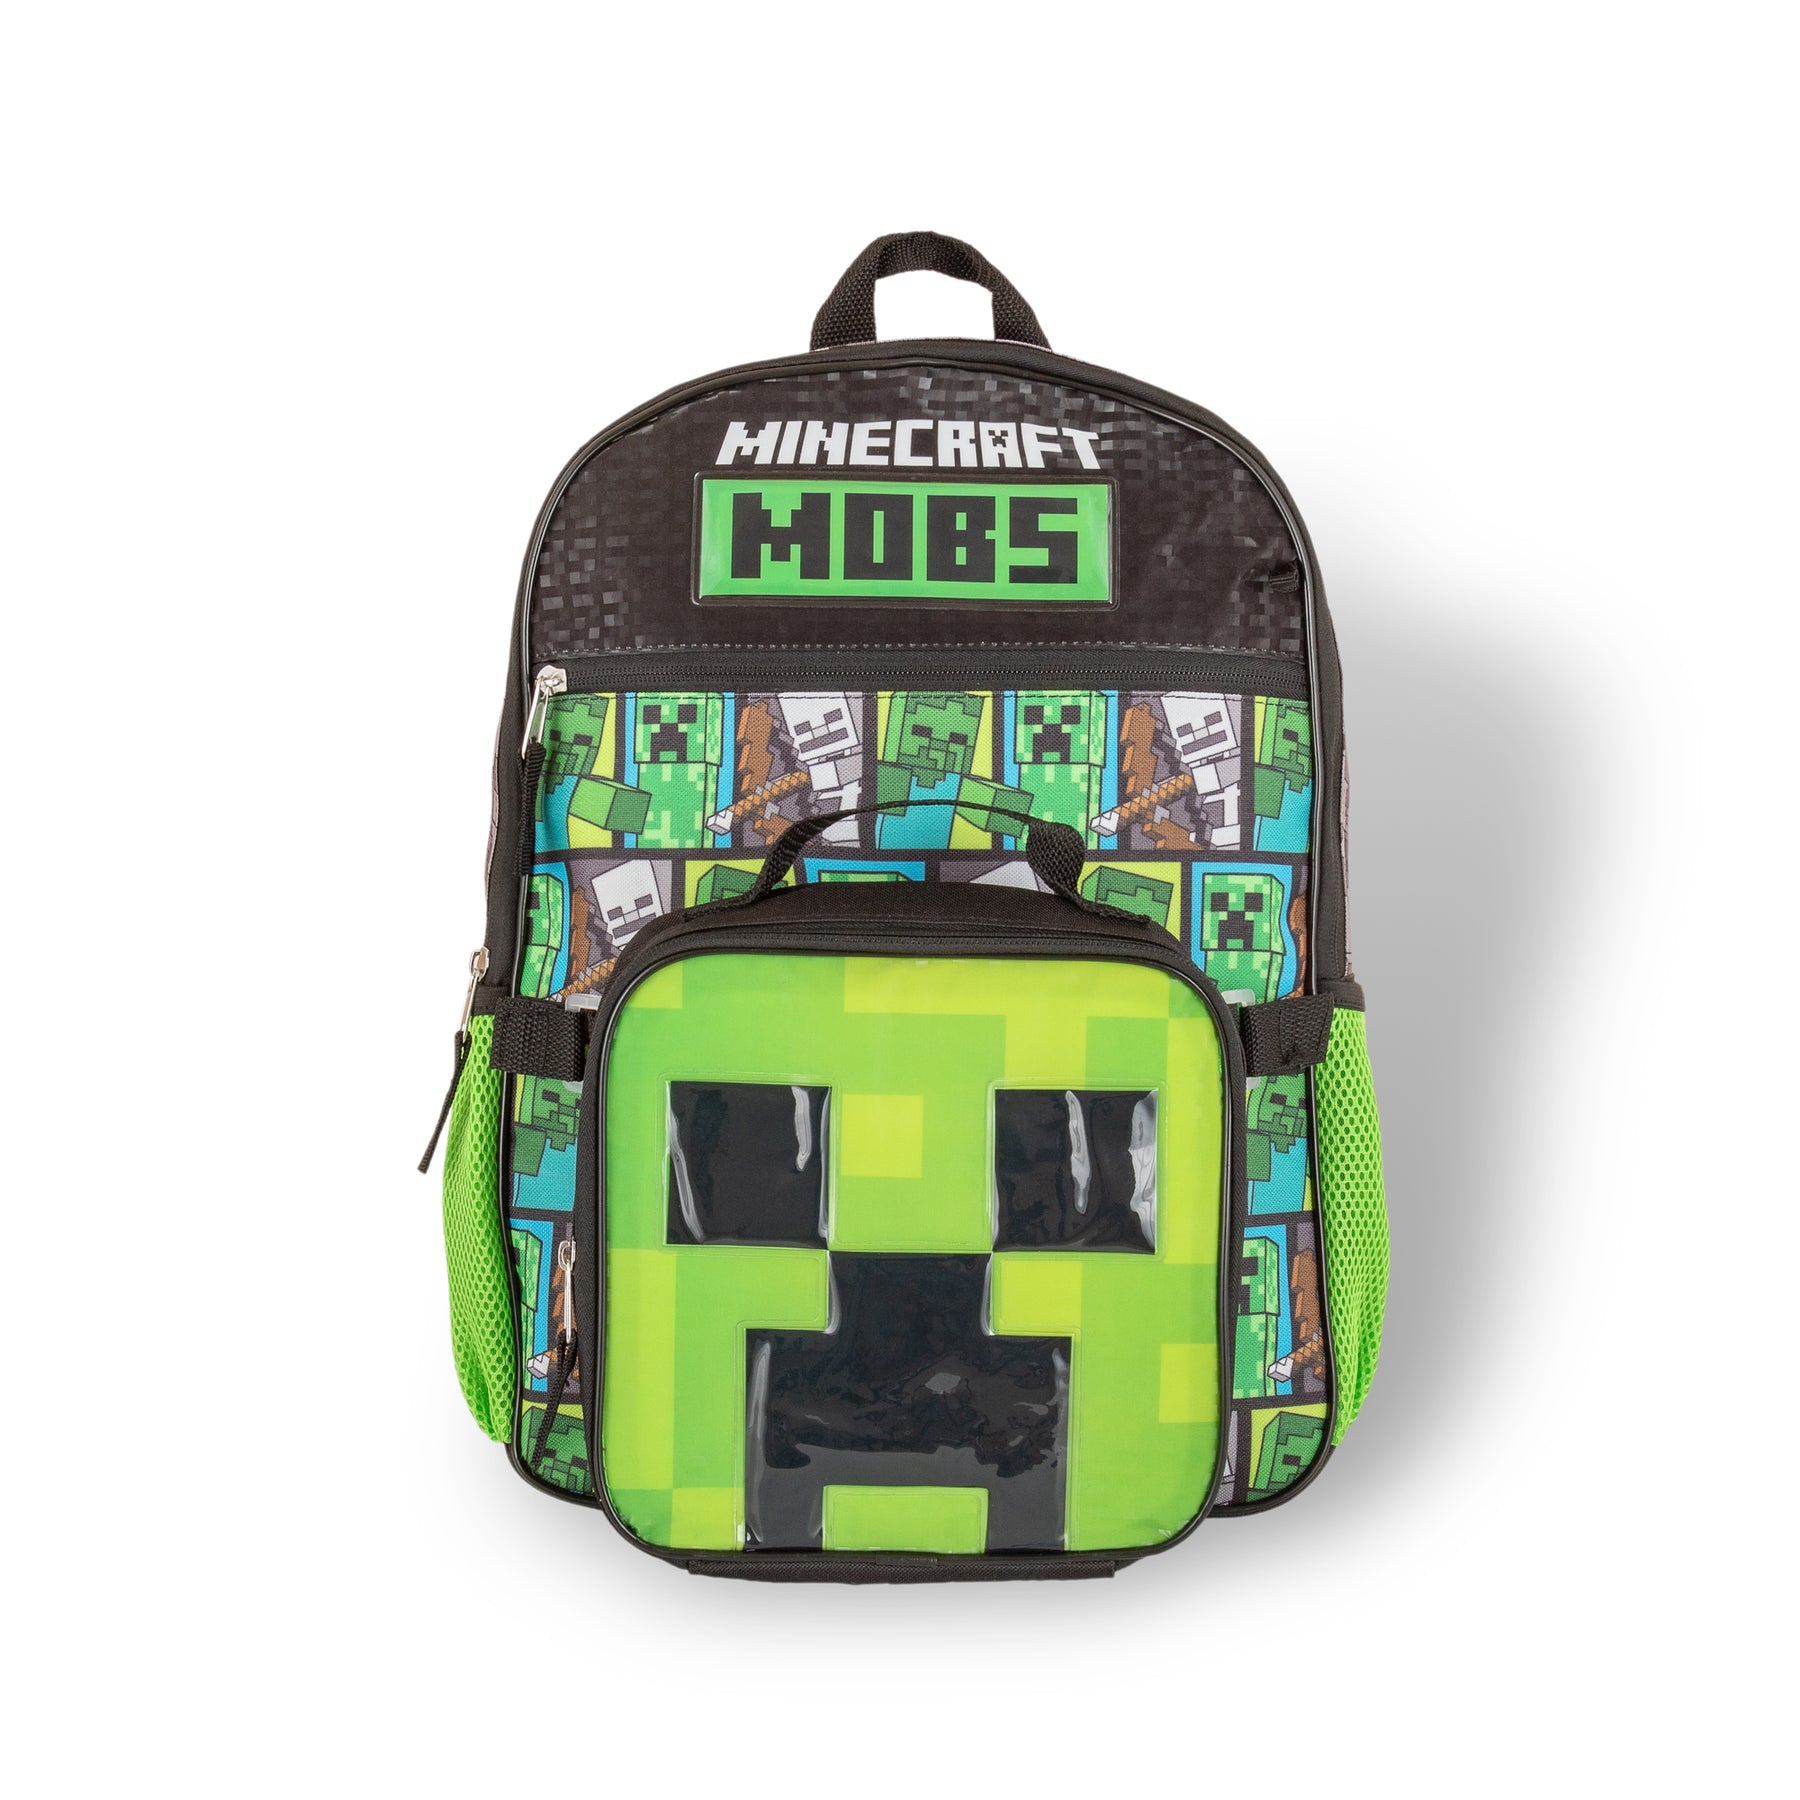 Minecraft backpack organized green Panini |Futurartshop